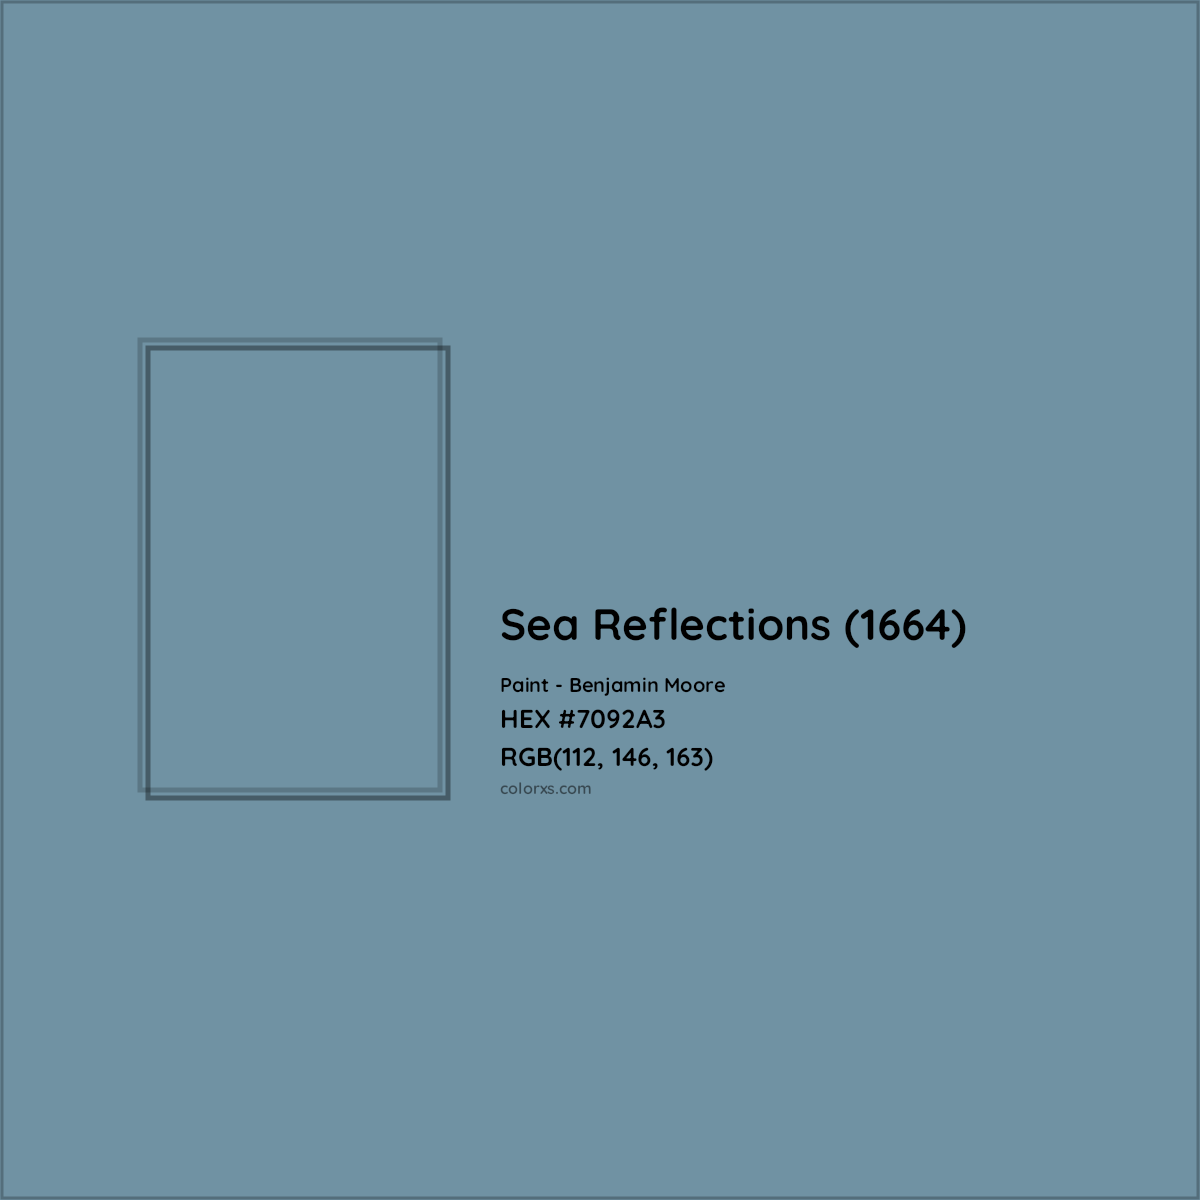 HEX #7092A3 Sea Reflections (1664) Paint Benjamin Moore - Color Code